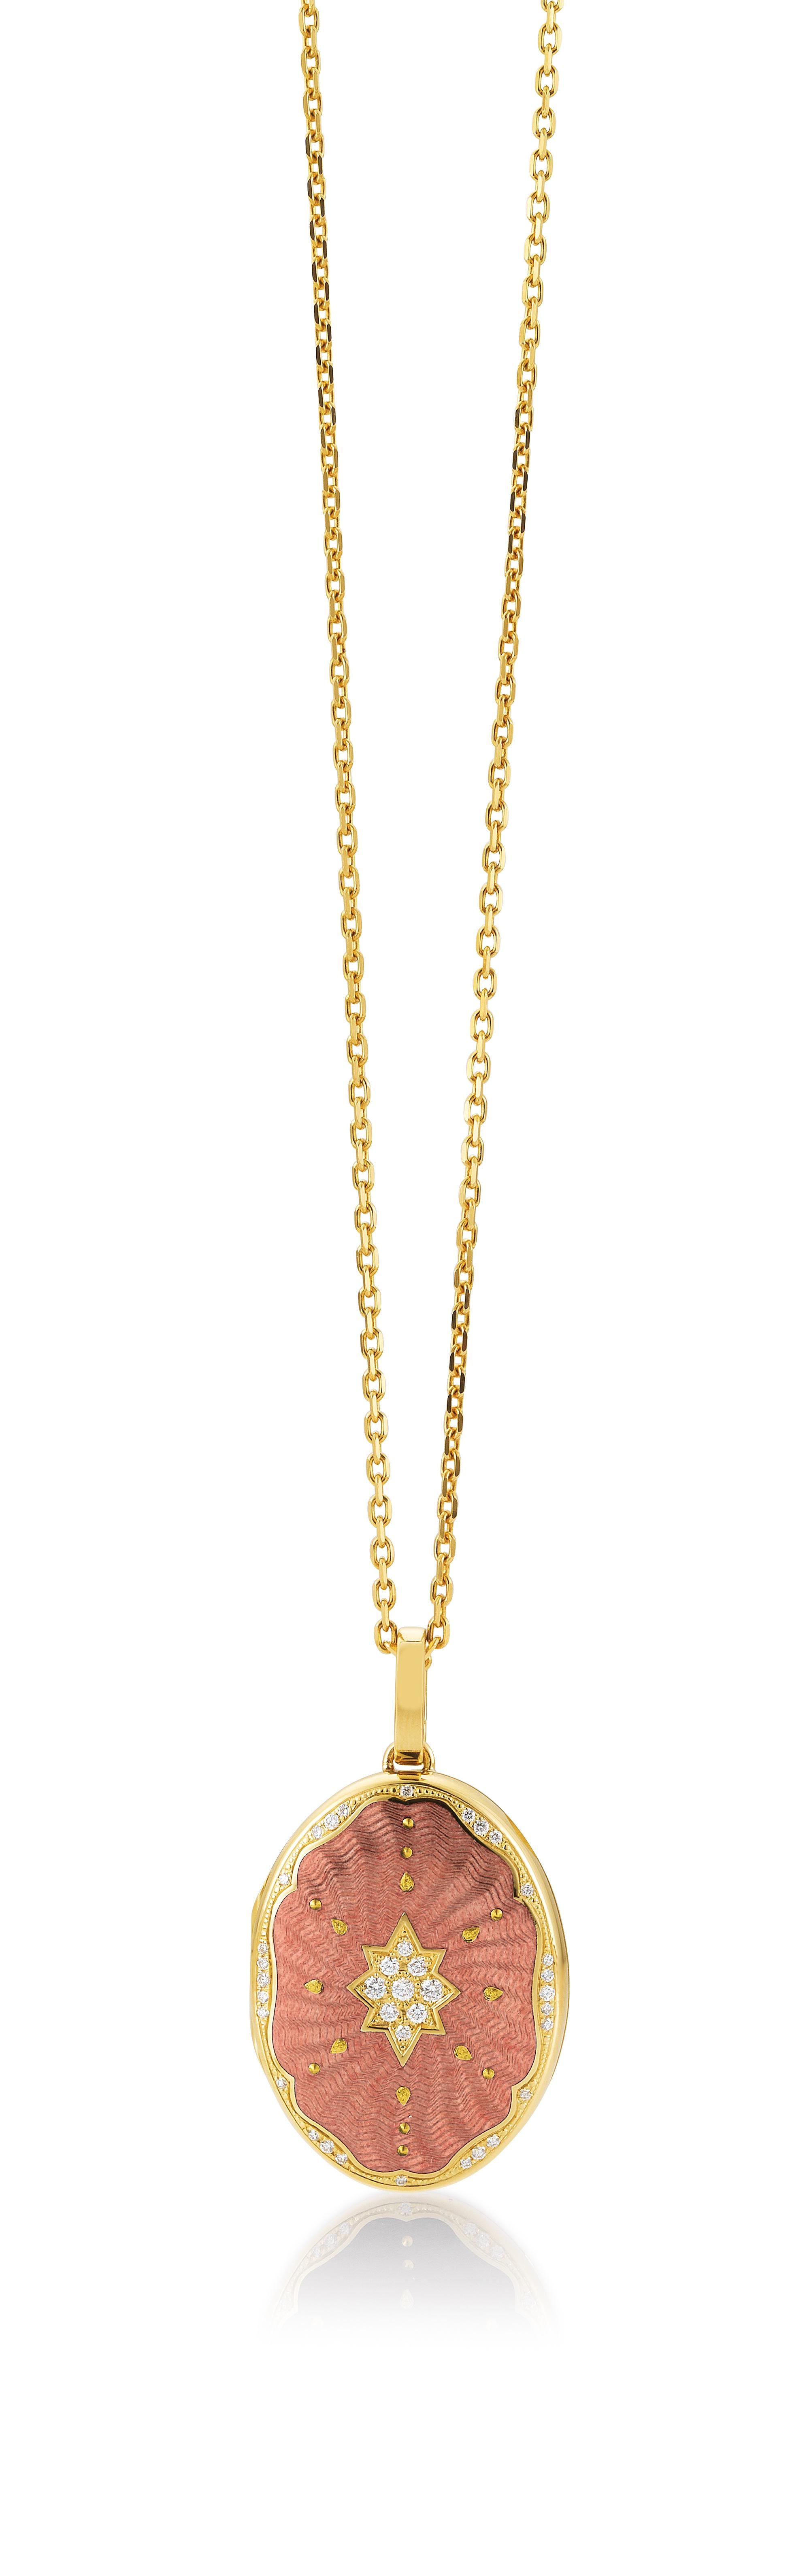 Brilliant Cut Oval Locket Pendant Necklace 18k Yellow Gold Rose Enamel 37 Diamonds 0.29 ct GVS For Sale